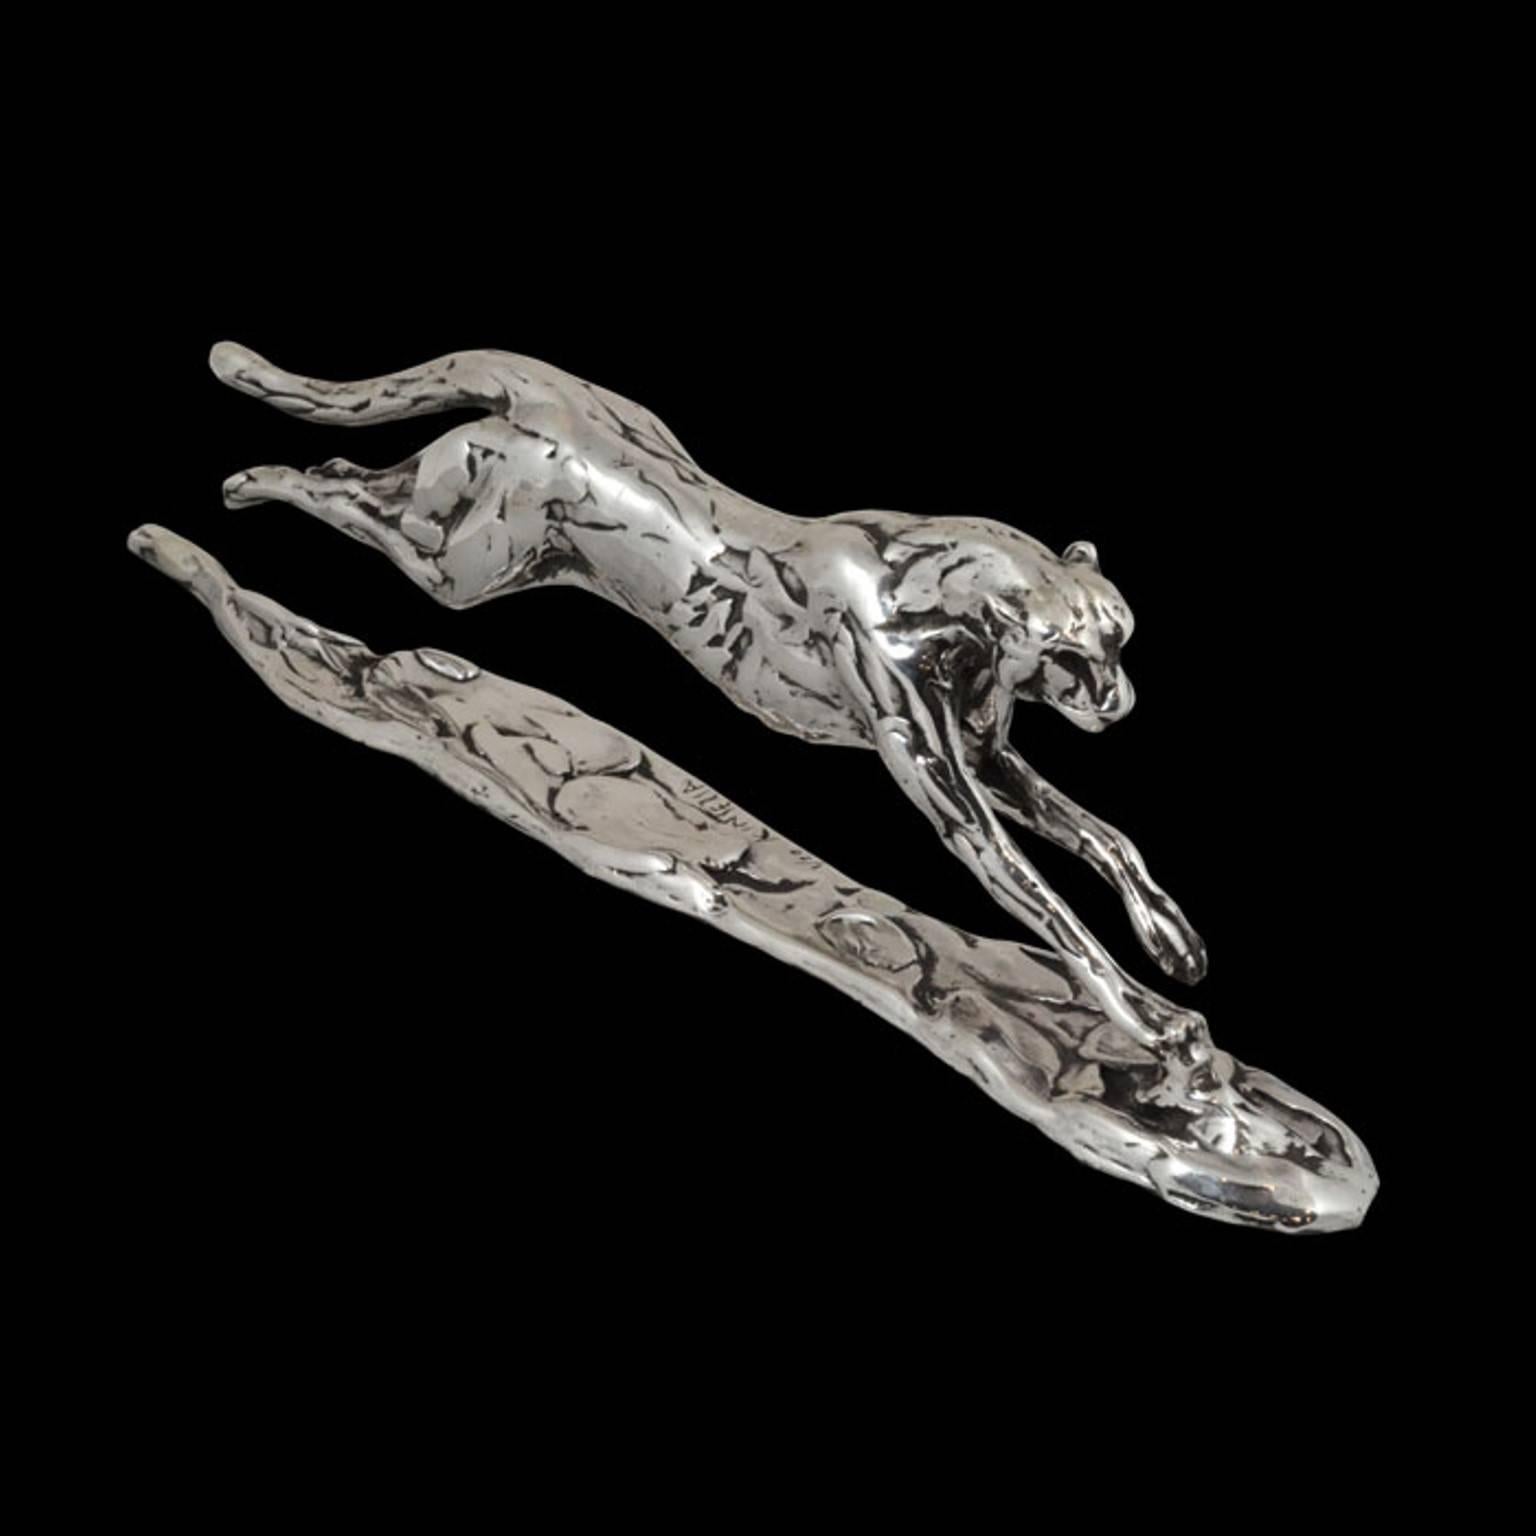  Lucy Kinsella 'Running Cheetah' Sterling Silver Sculpture  2